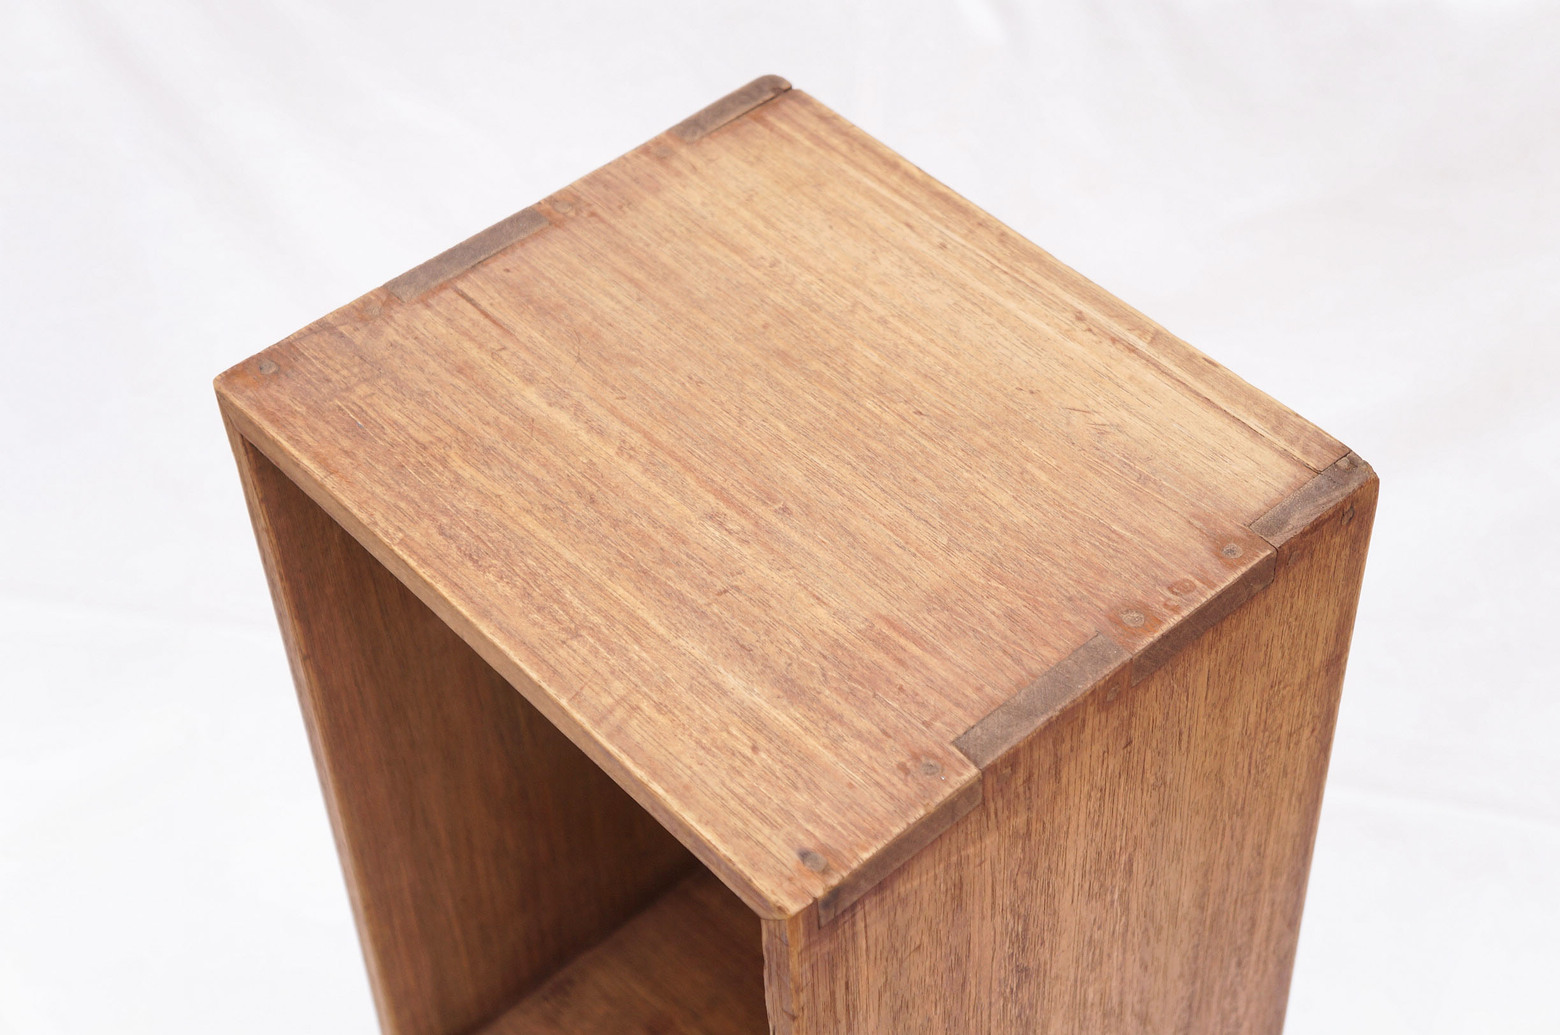 Japanese Vintage Wooden Box Shelf/ジャパンヴィンテージ ボックスシェルフ 木箱 収納ボックス レトロ シャビー 小 5